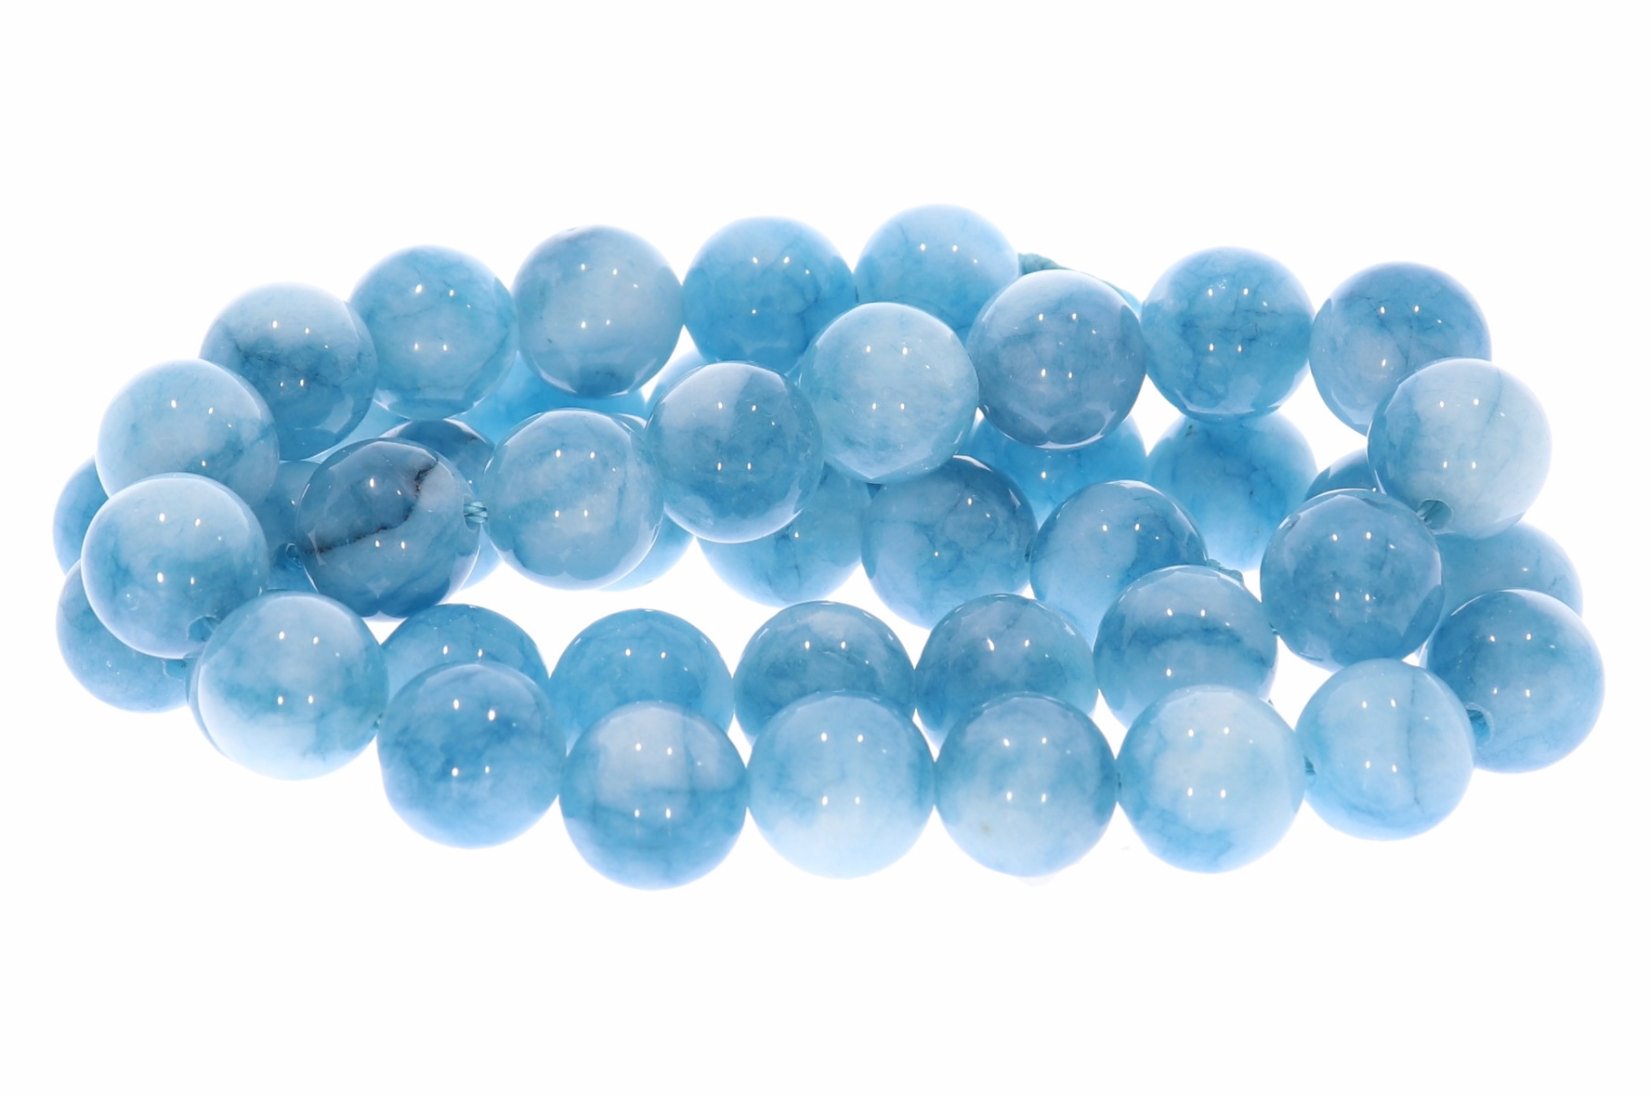 8S248 - Mashan Jade blau gefleckt 8mm Kugel Strang Mineralien Edelstein